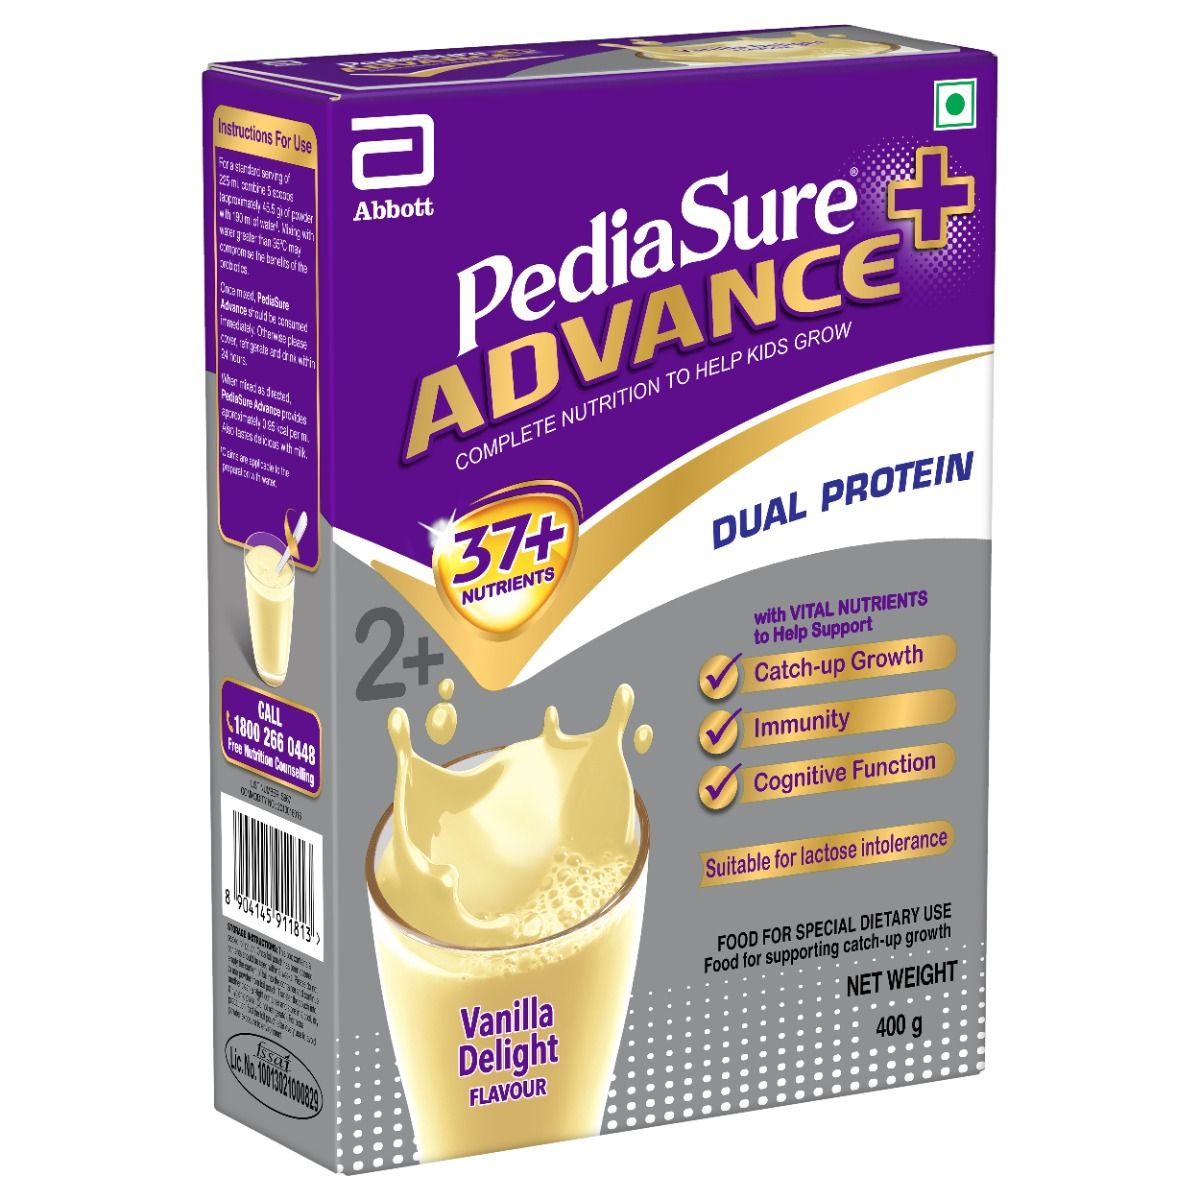 Pediasure Advance + Vanilla Delight Flavour Nutrition Drink Powder, 400 gm Refill Pack, Pack of 1 